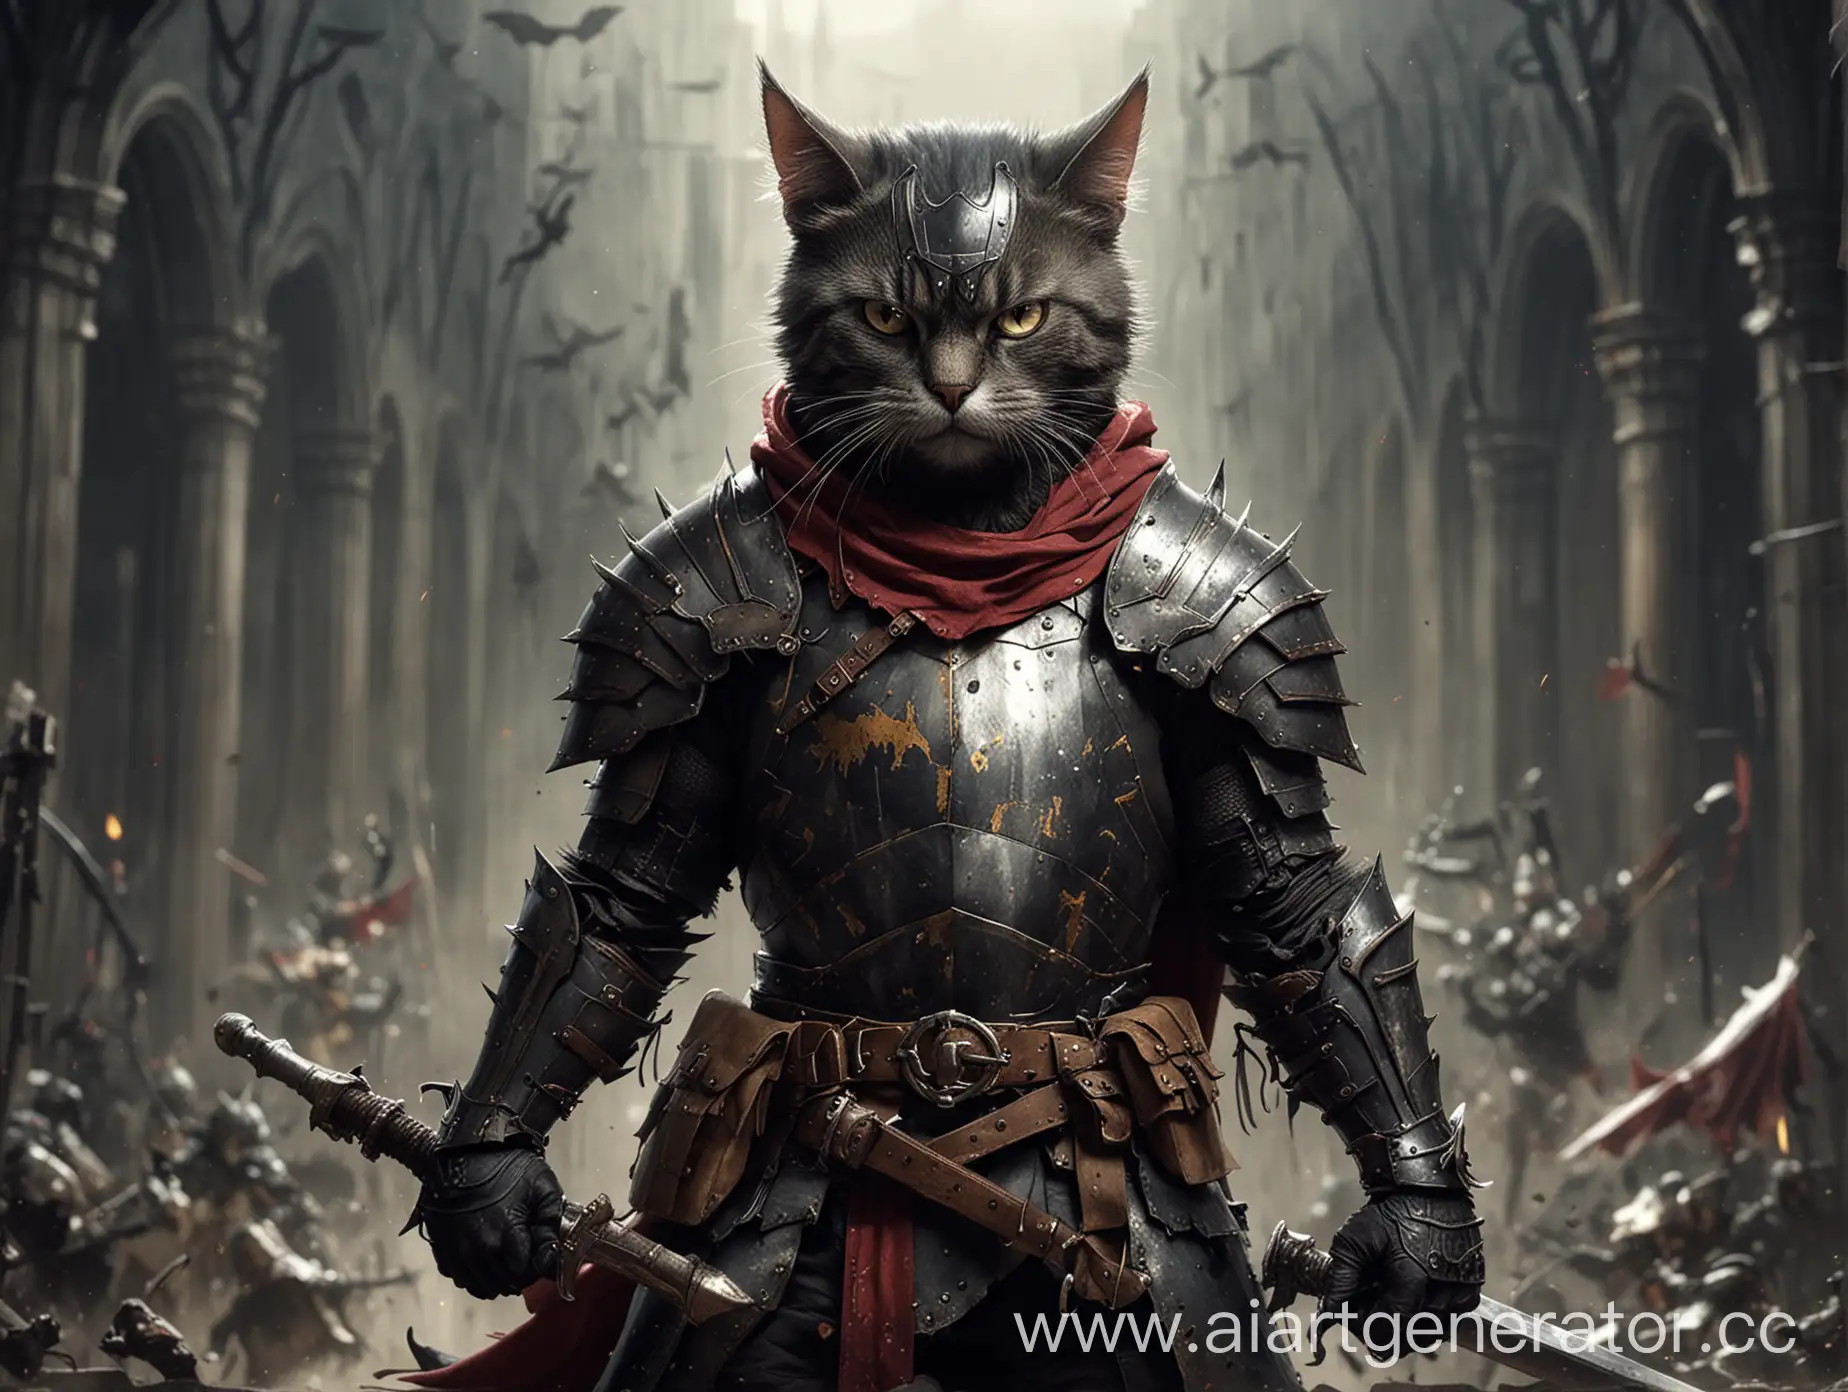 Fierce-Cat-Knight-in-a-Mystical-Forest-Battle